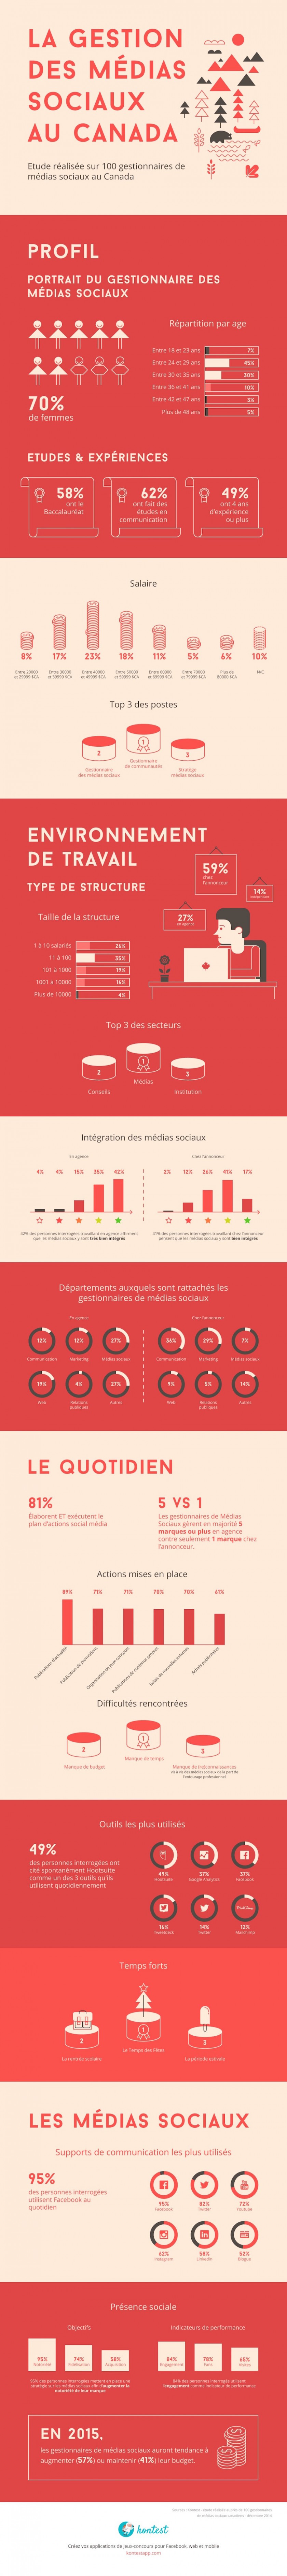 Infographie Kontest - Etude Gestionnaires Communautes Quebec - Janvier 2015